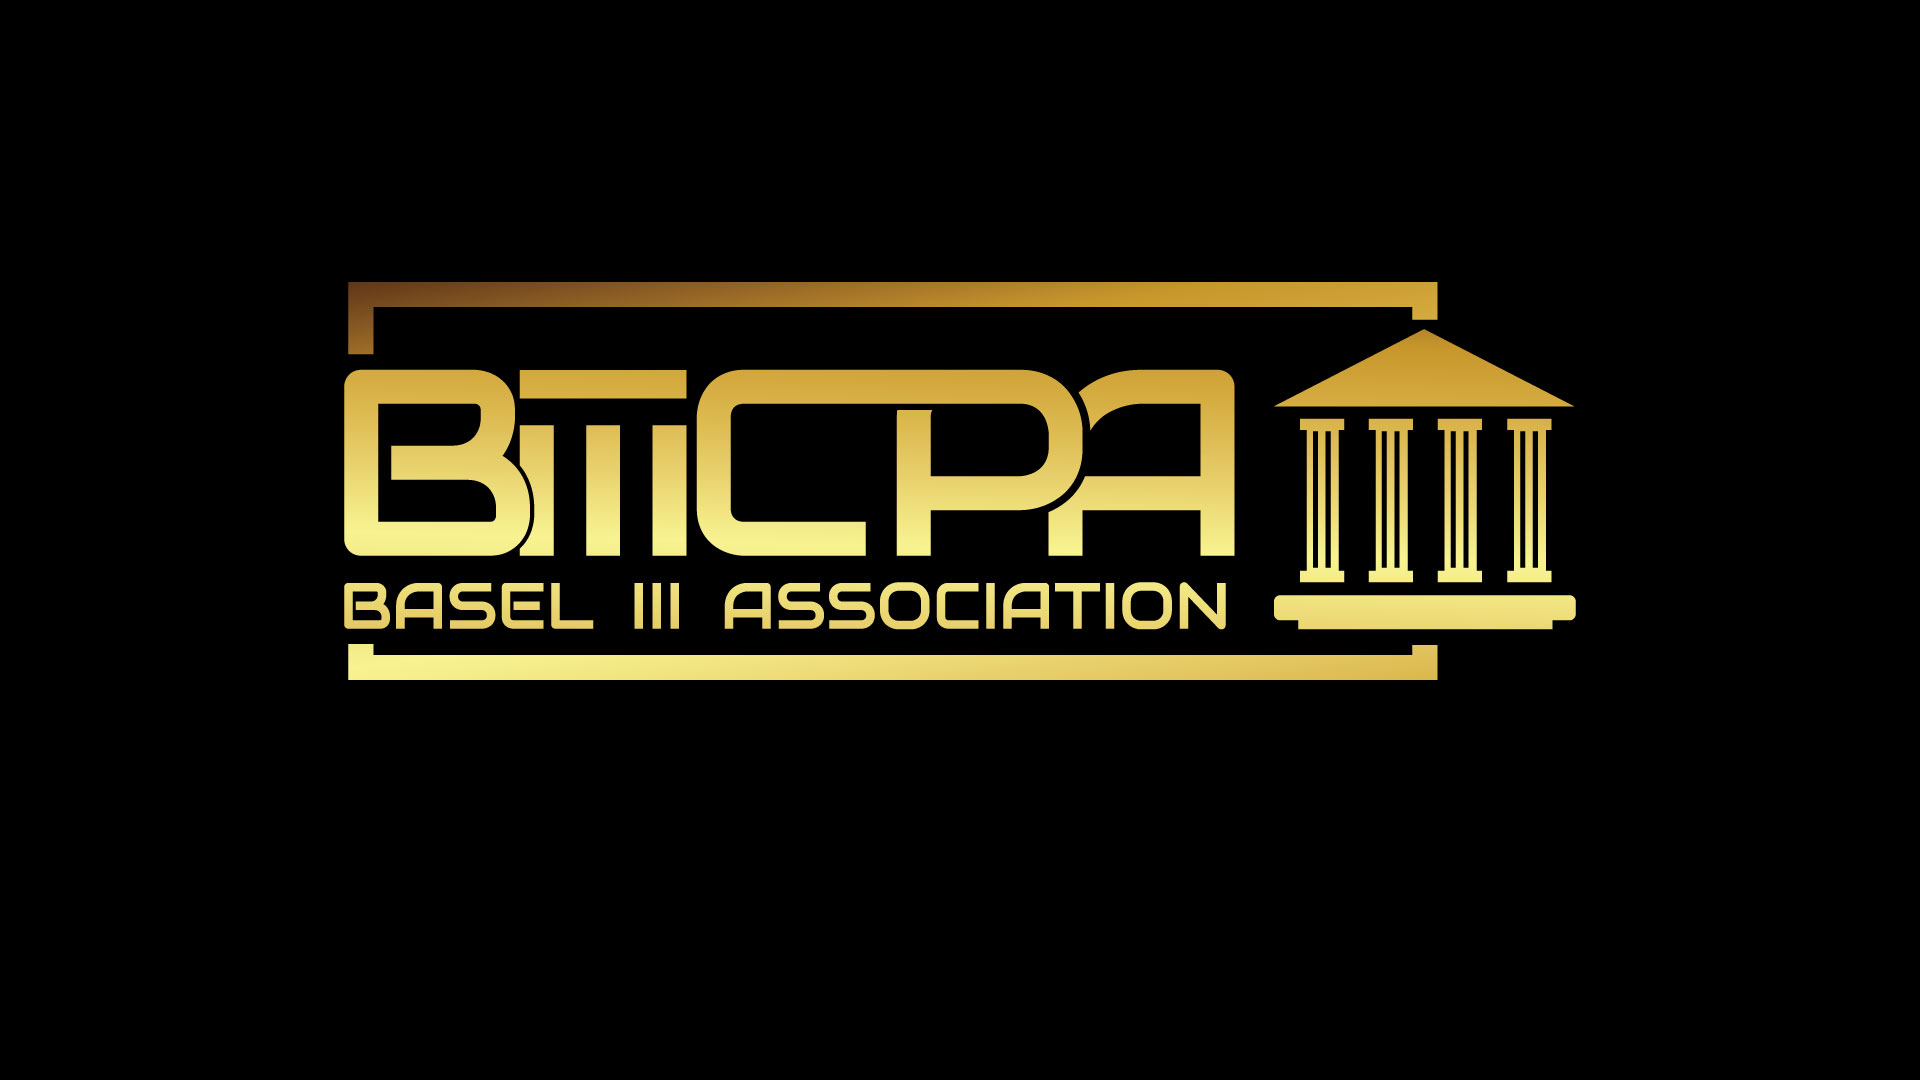 Basel iii Compliance Professionals Association (BiiiCPA)